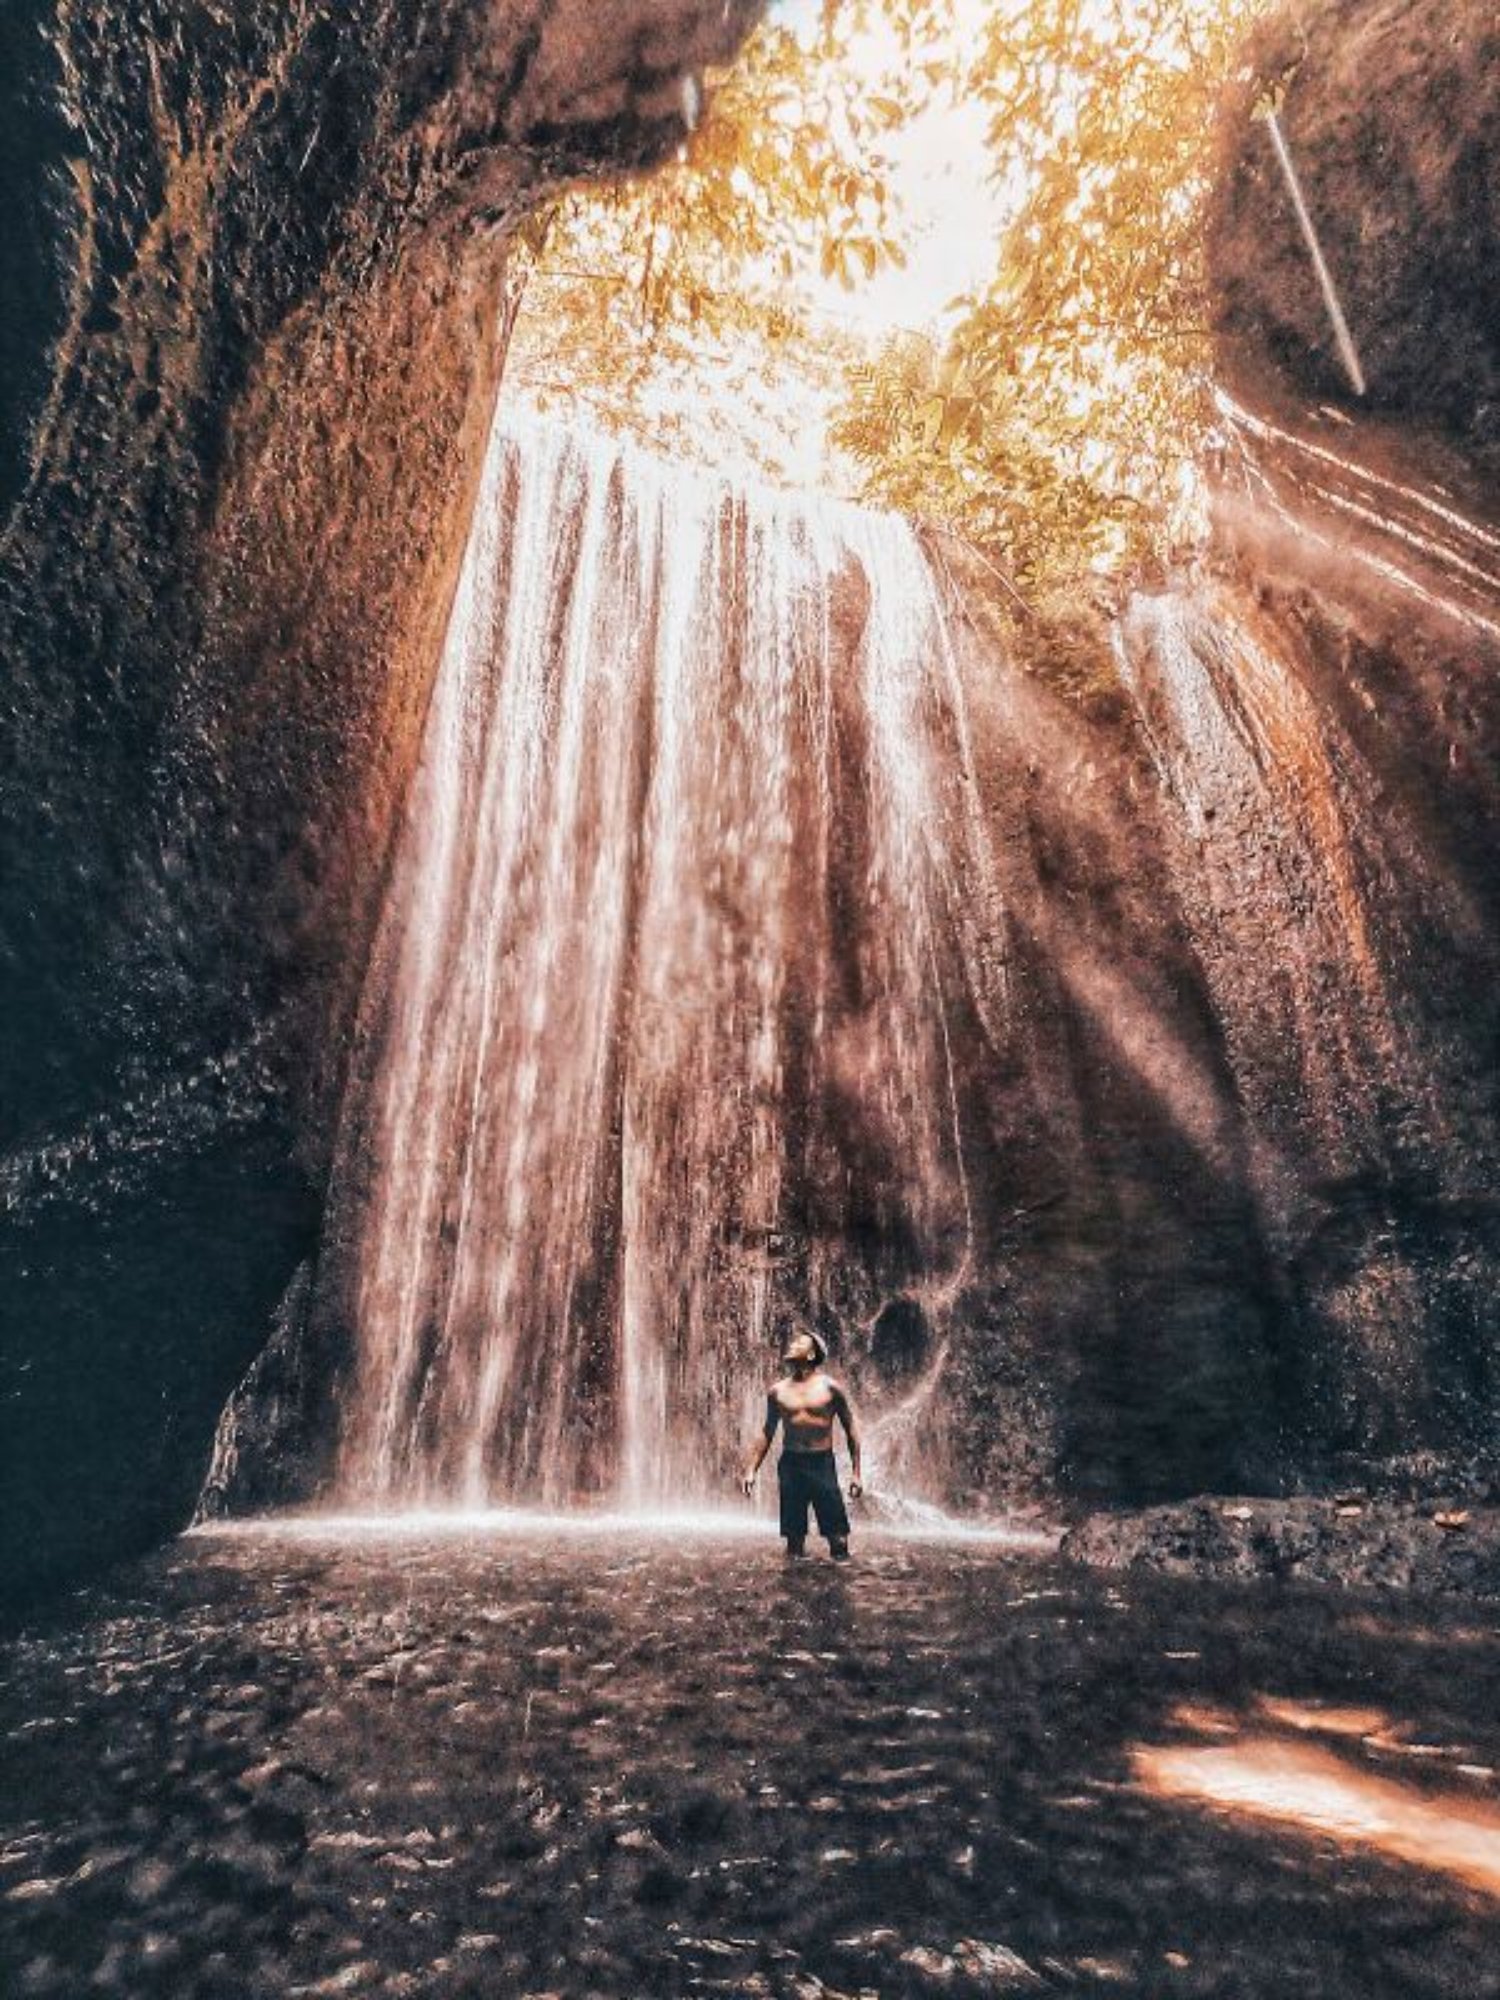 Bali Tukad Cepung Waterfall